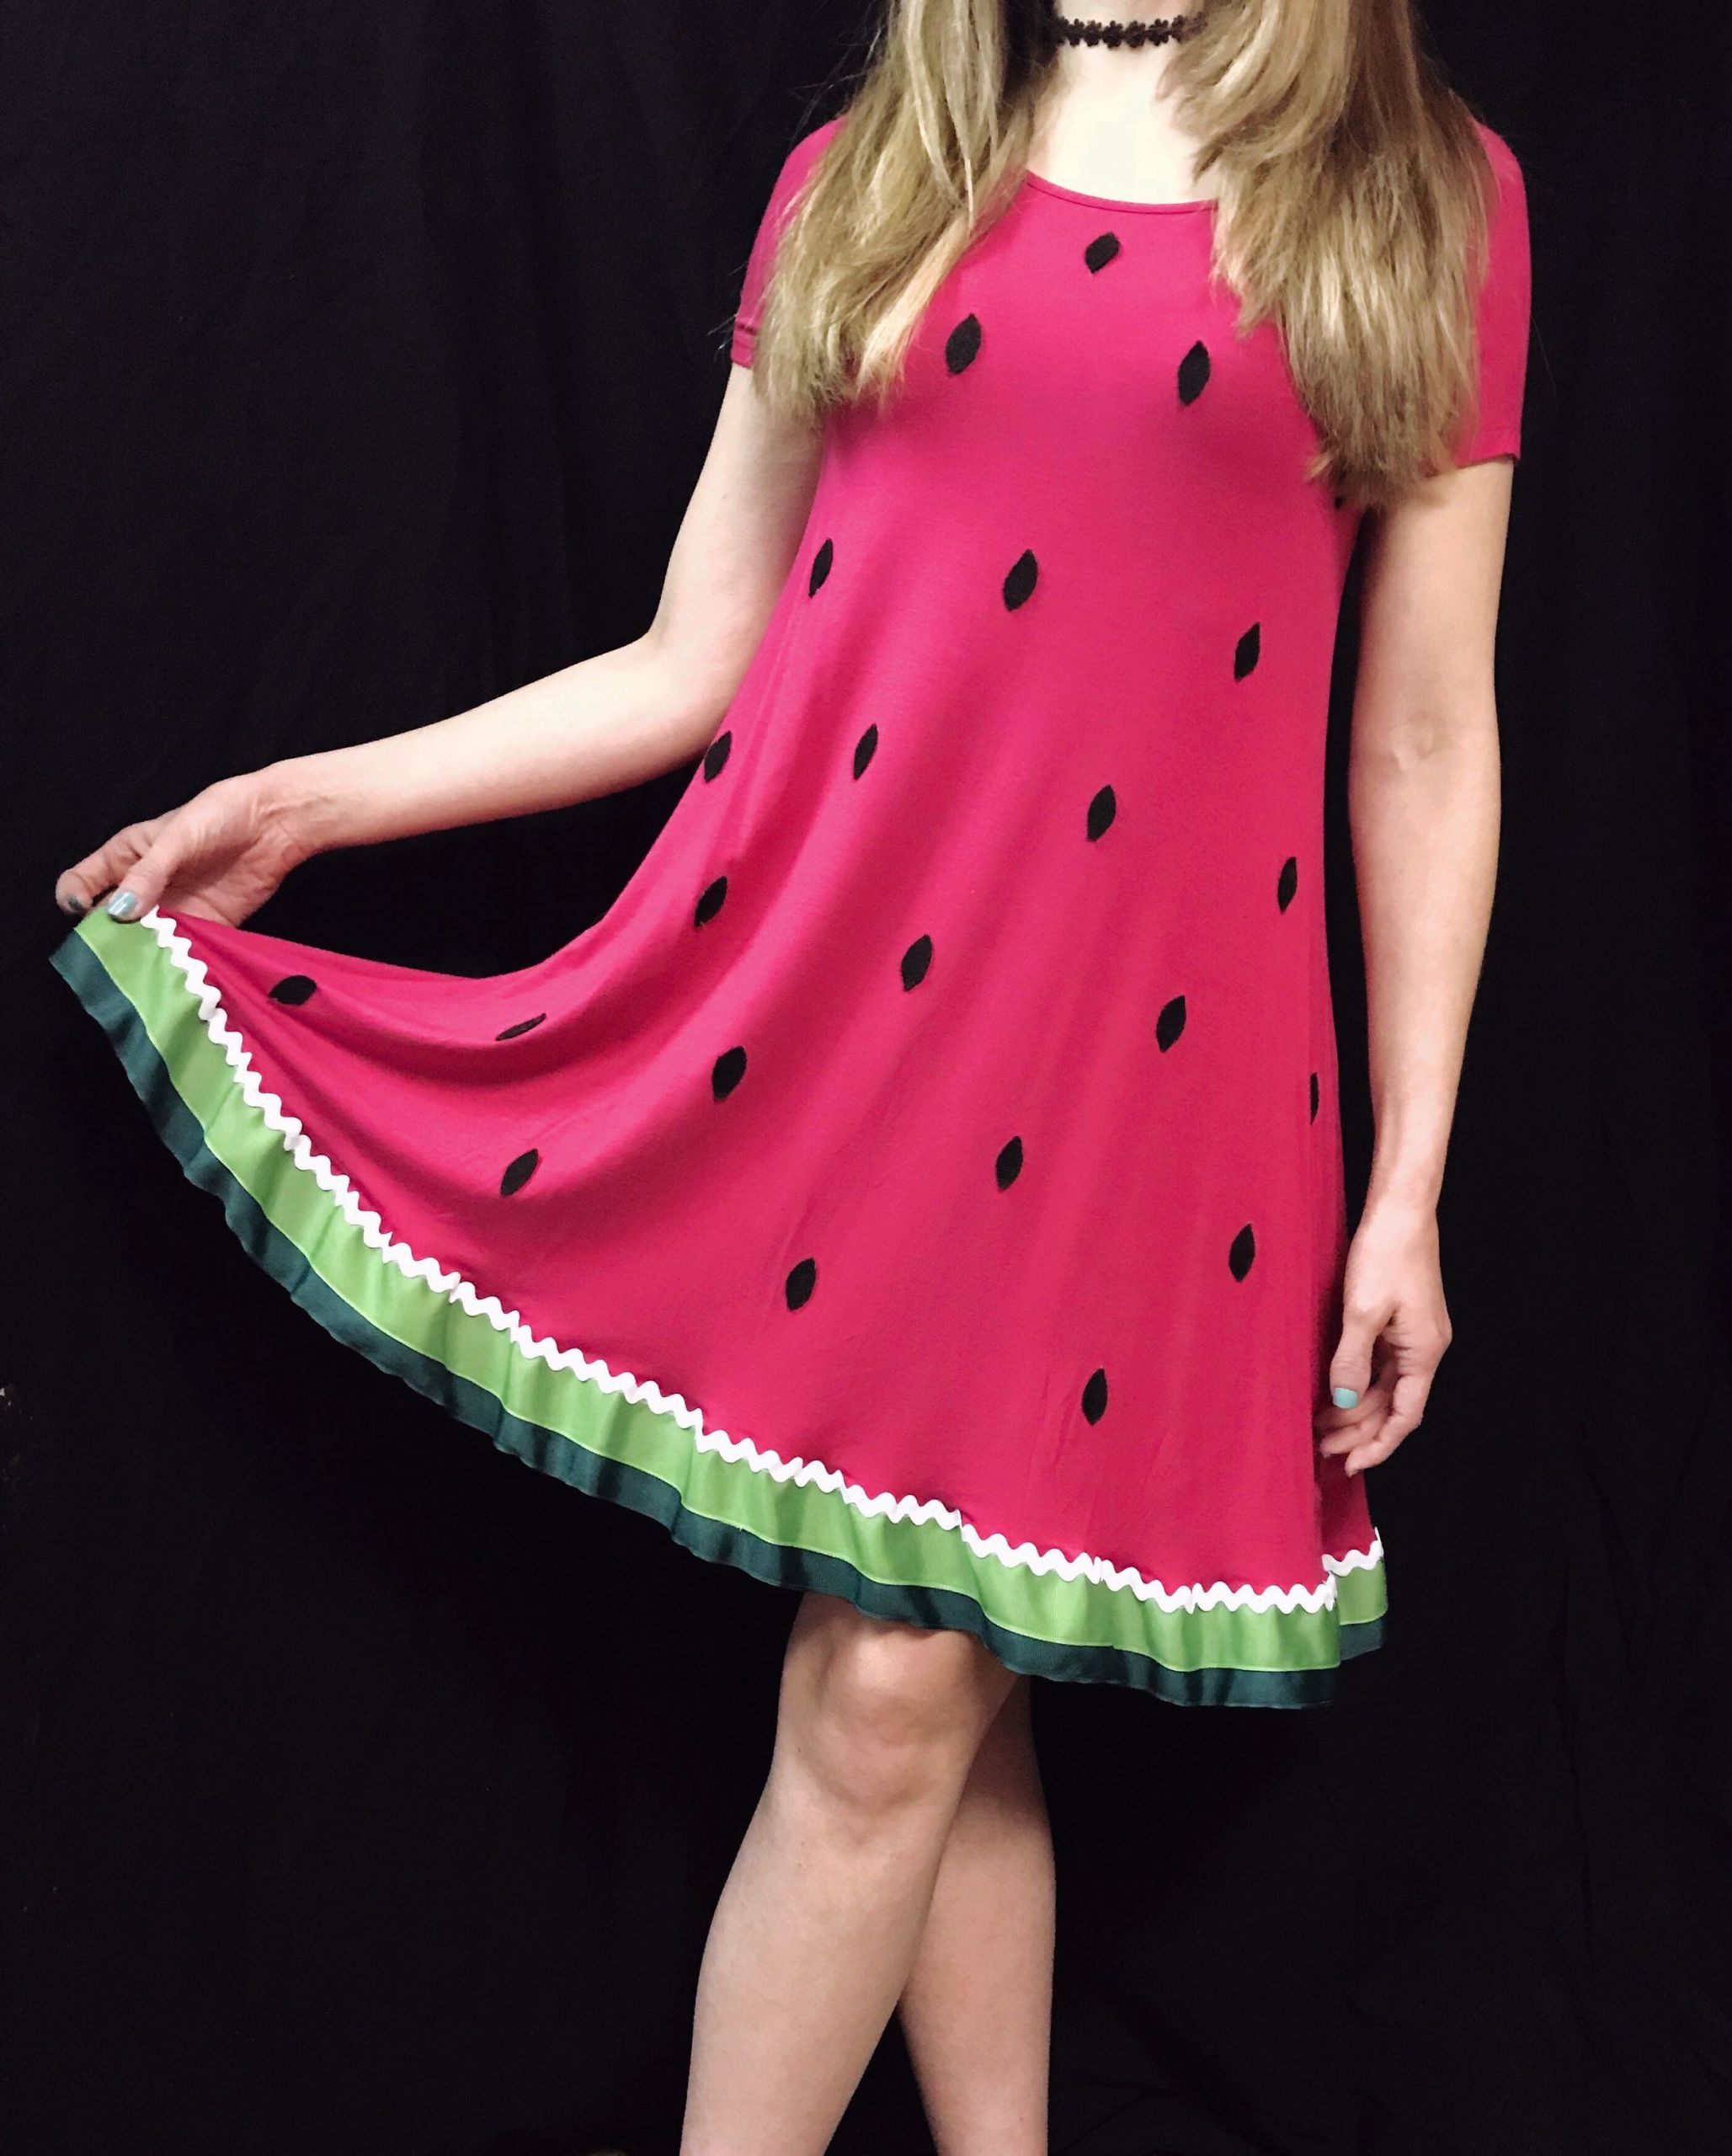 DIY Watermelon Costume
 Watermelon Dress DIY